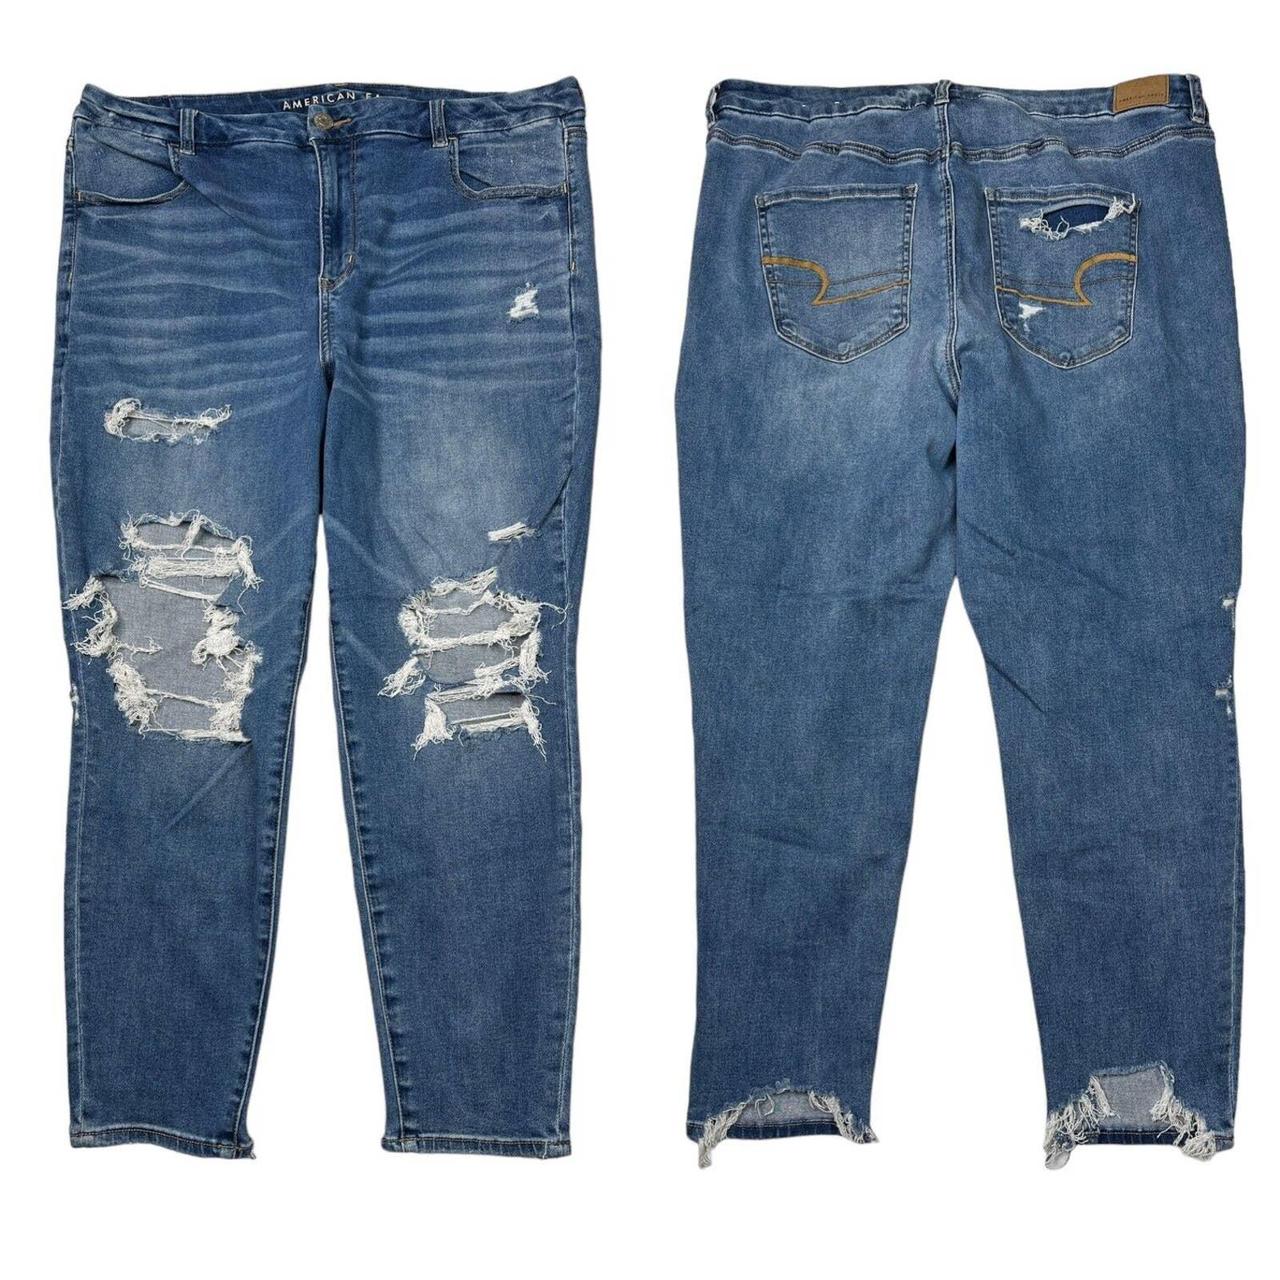 American Eagle ripped skinny jeans. medium wash - Depop